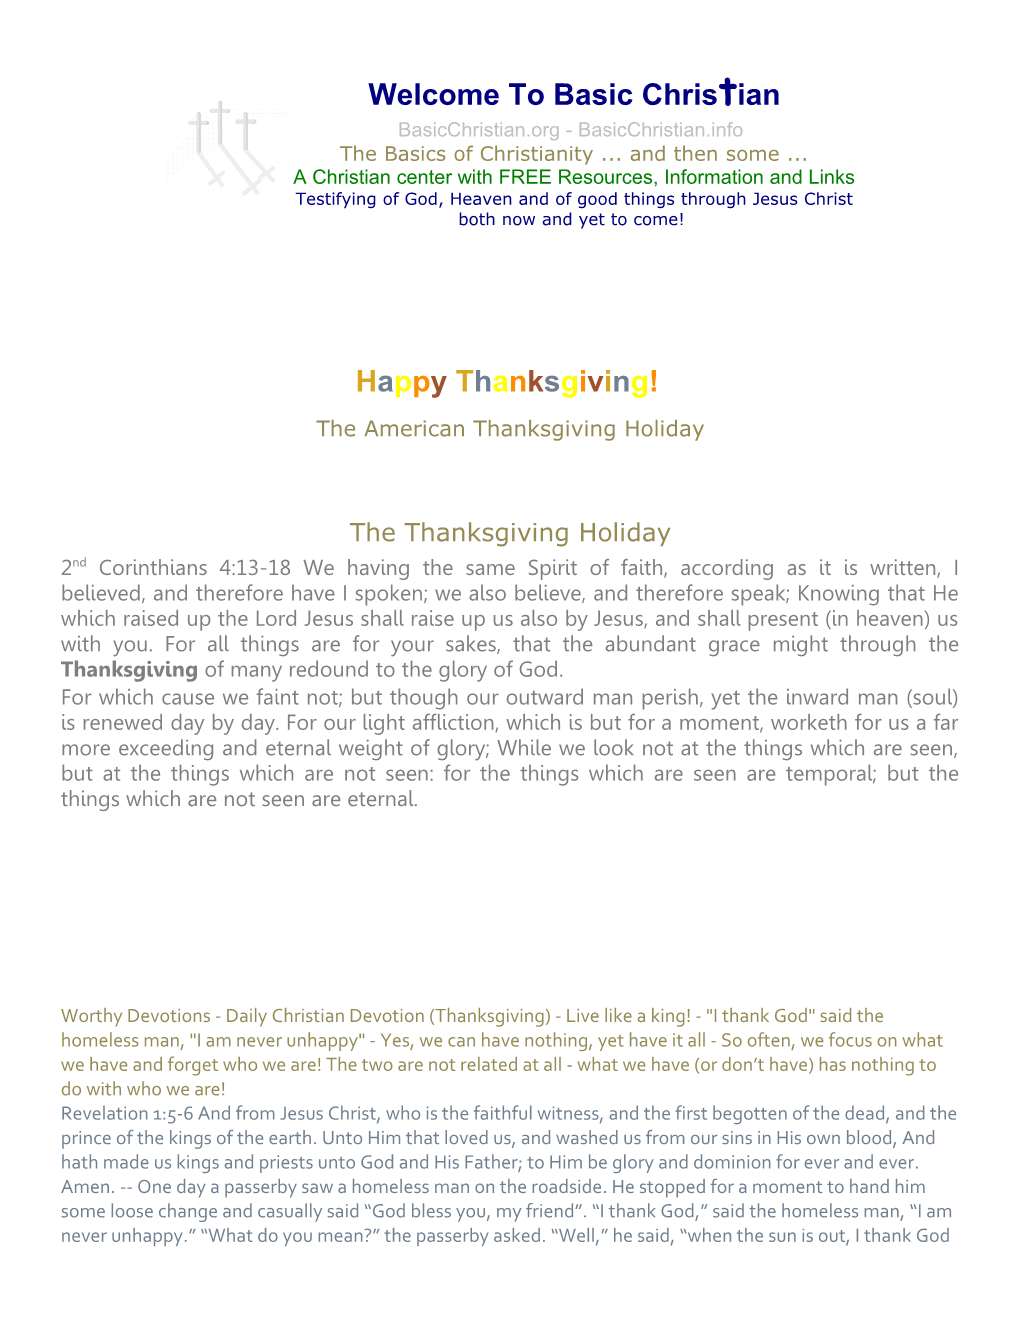 Basic Christian: Thanksgiving Holiday